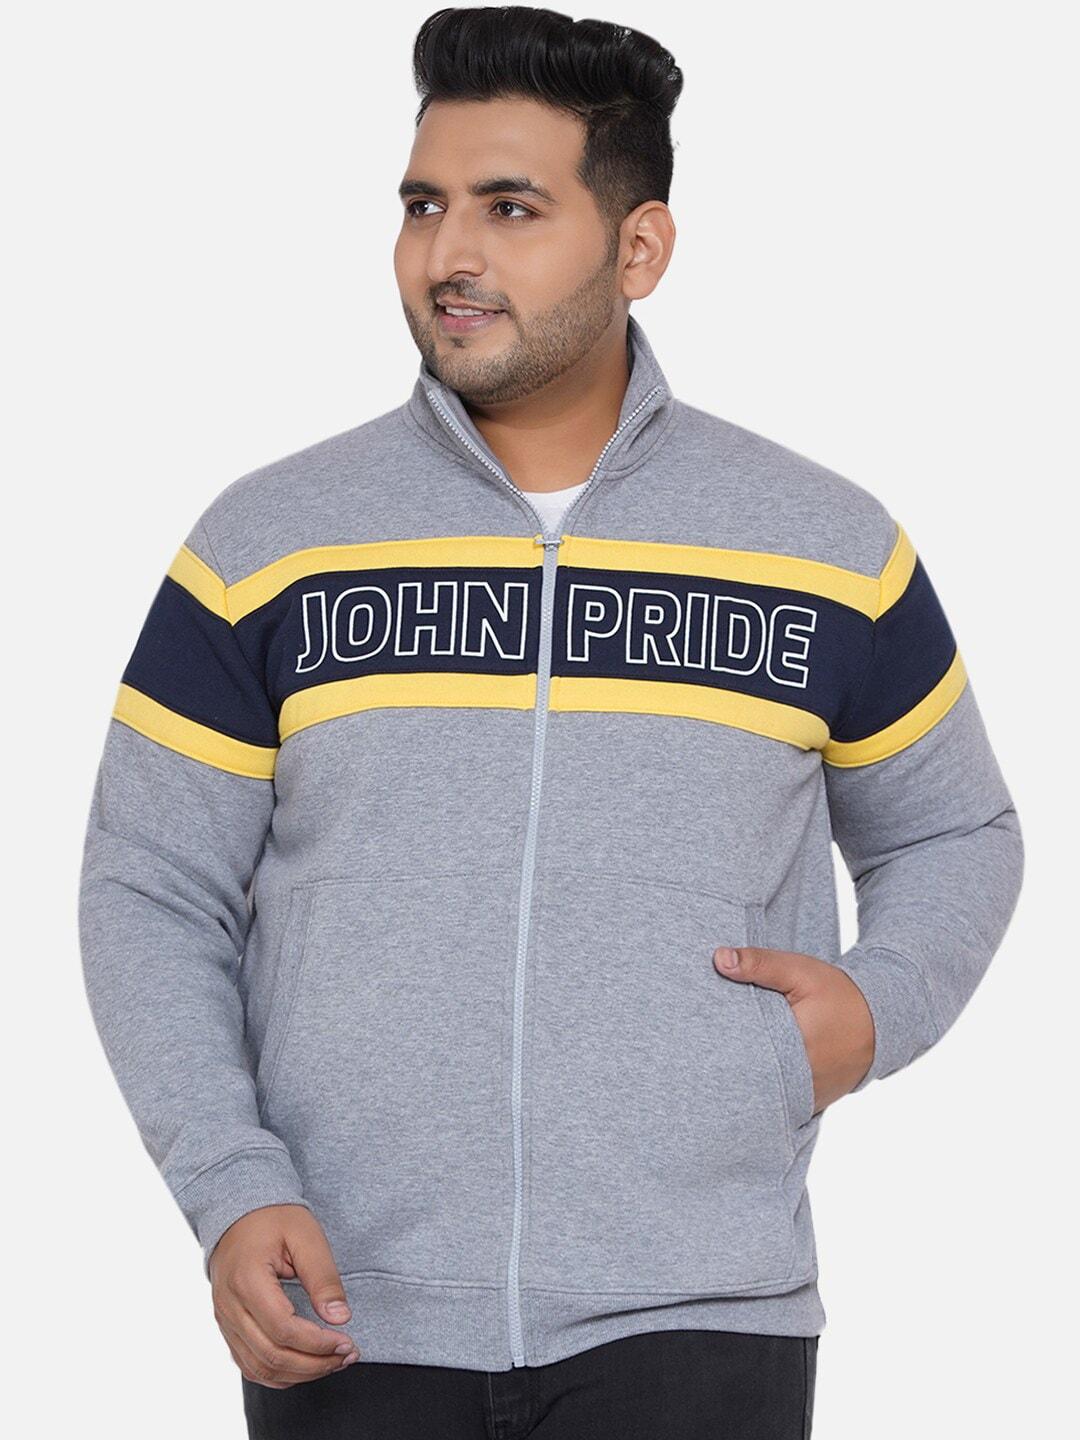 john pride plus size men grey printed sweatshirt